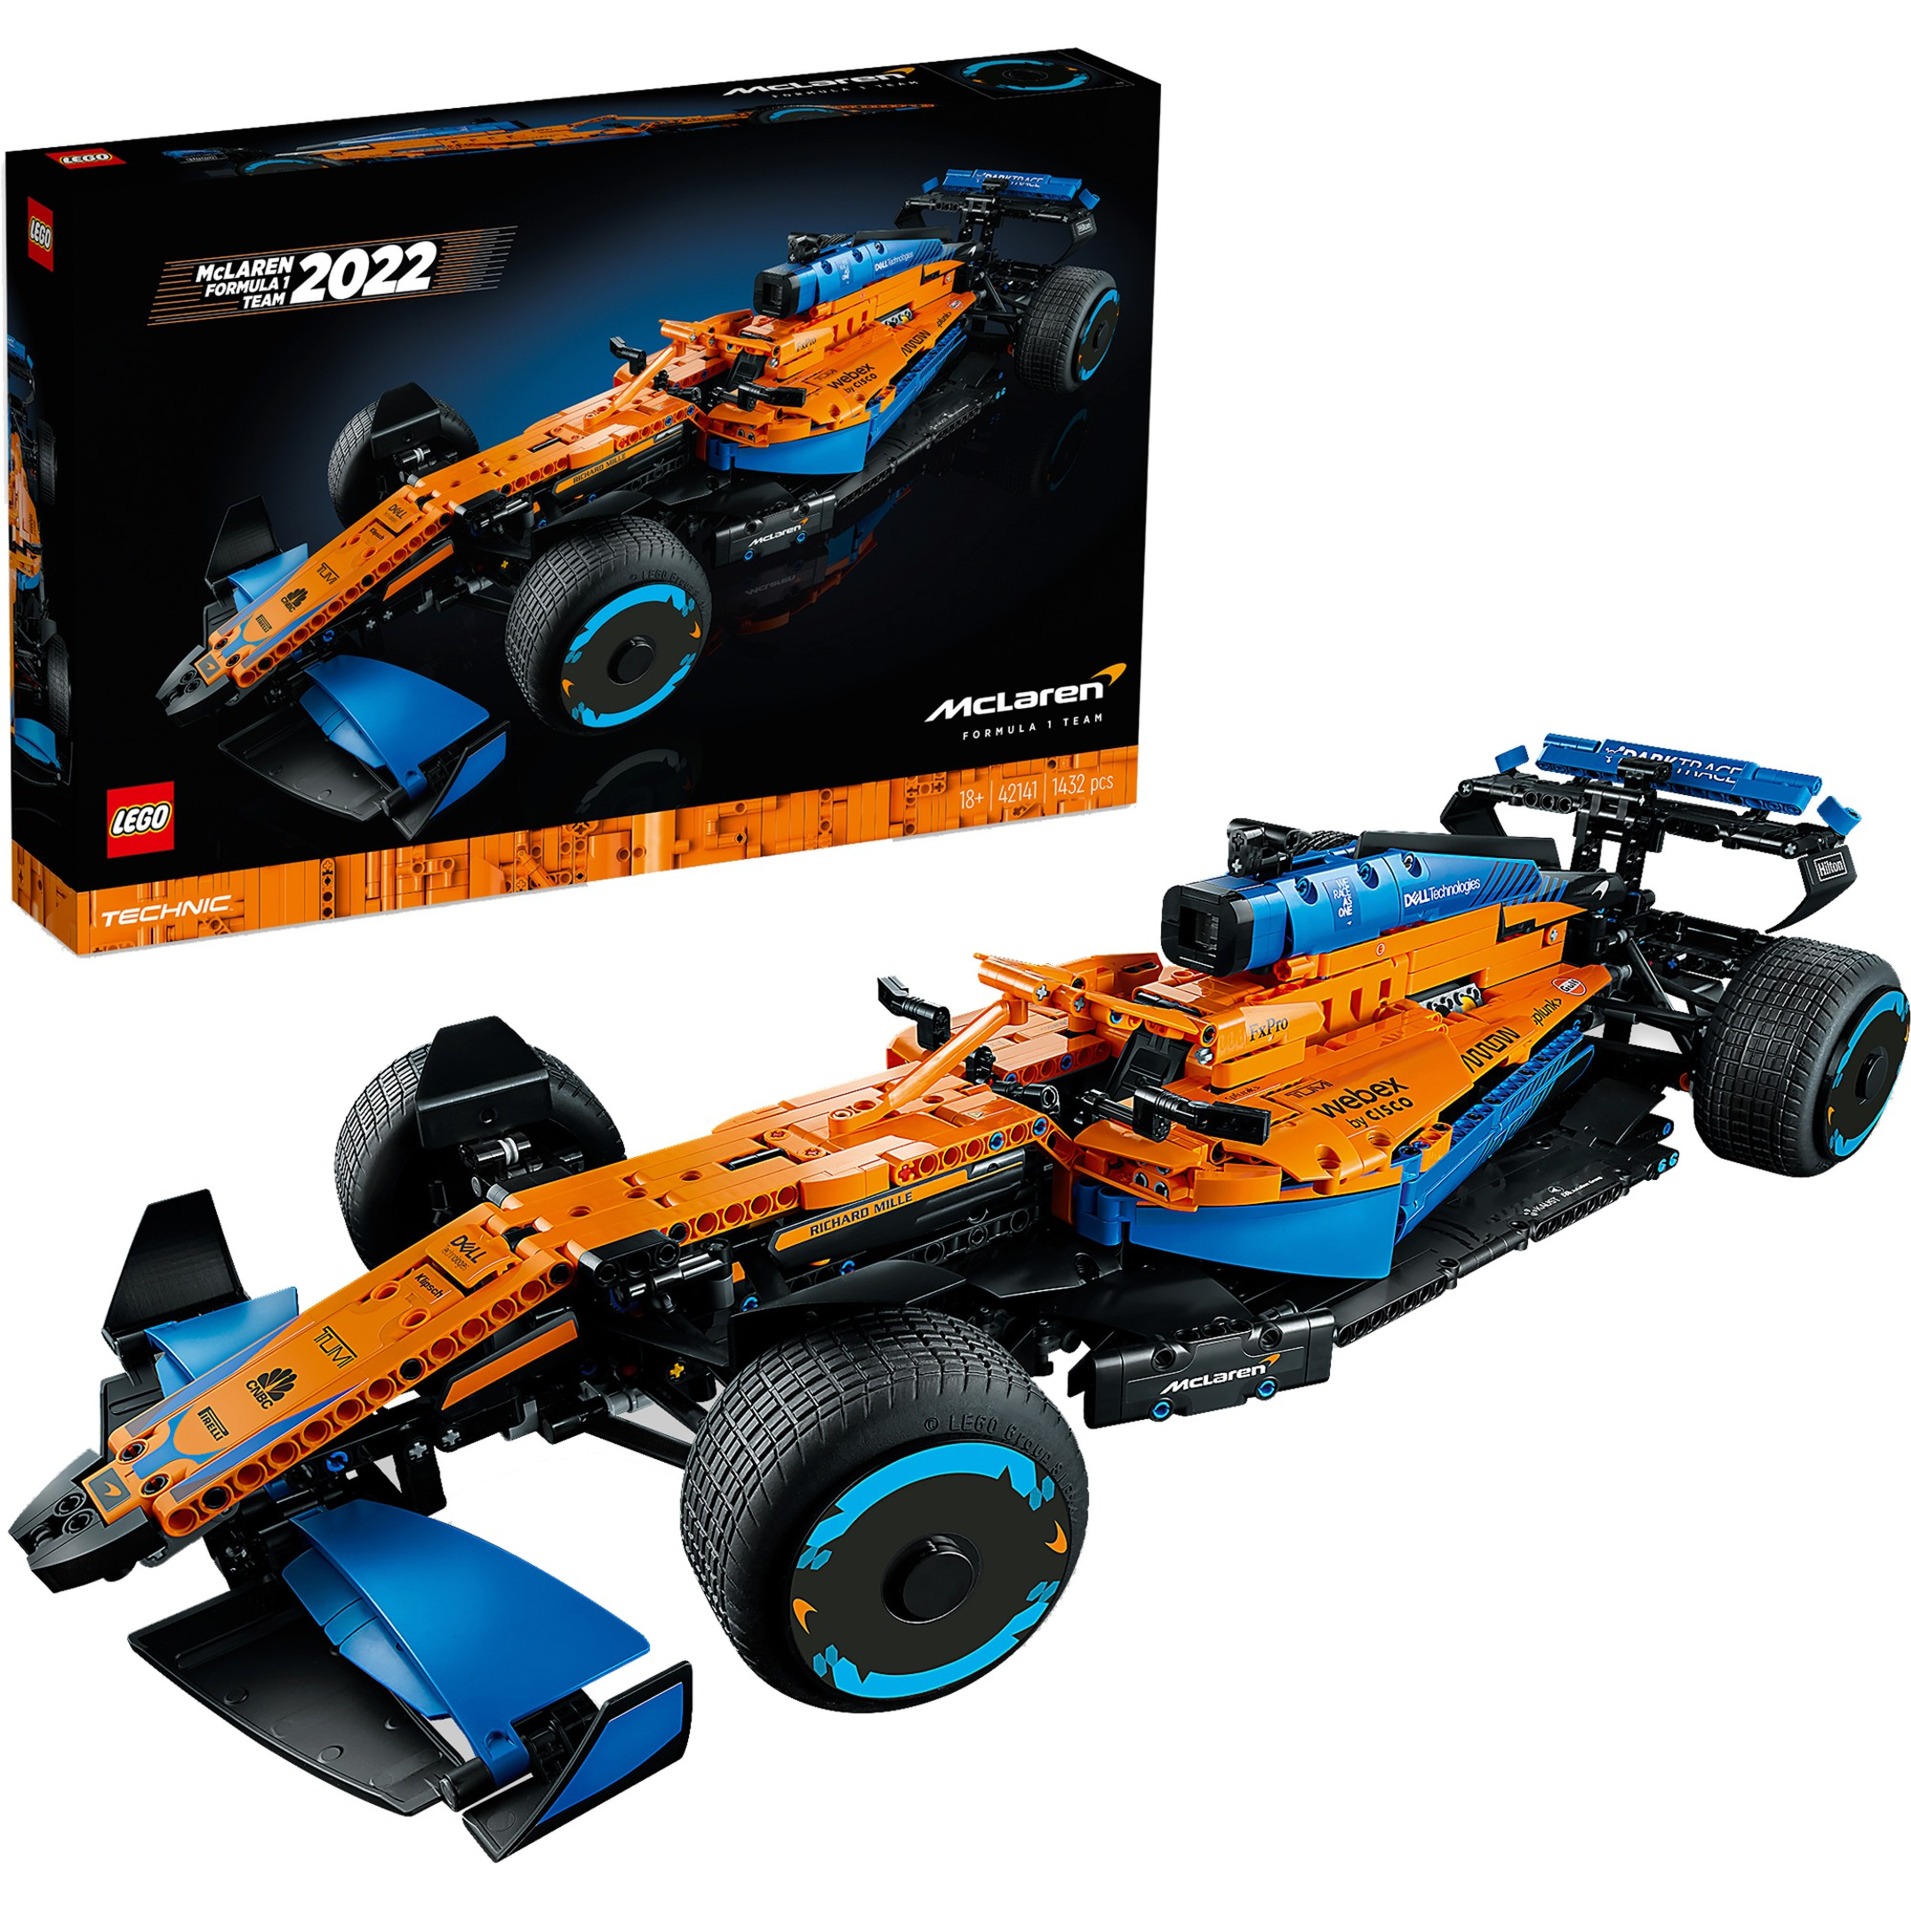 Spielzeug: Lego 42141 LEGO Technic McLaren Formel 1 Rennwagen